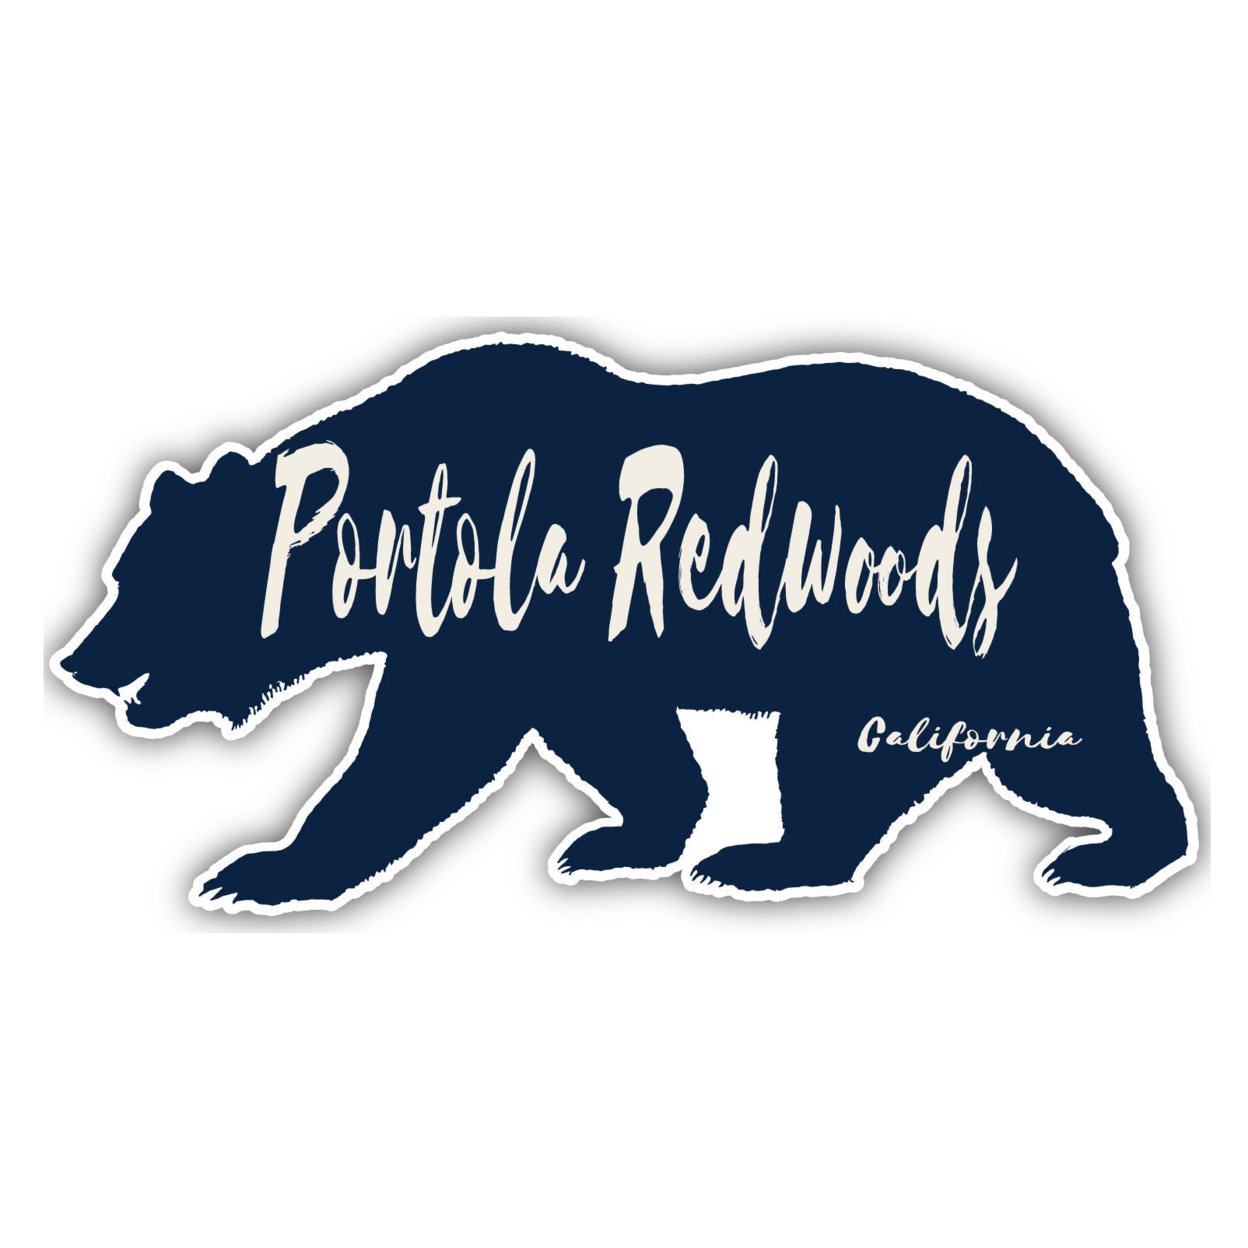 Portola Redwoods California Souvenir Decorative Stickers (Choose Theme And Size) - Single Unit, 4-Inch, Tent